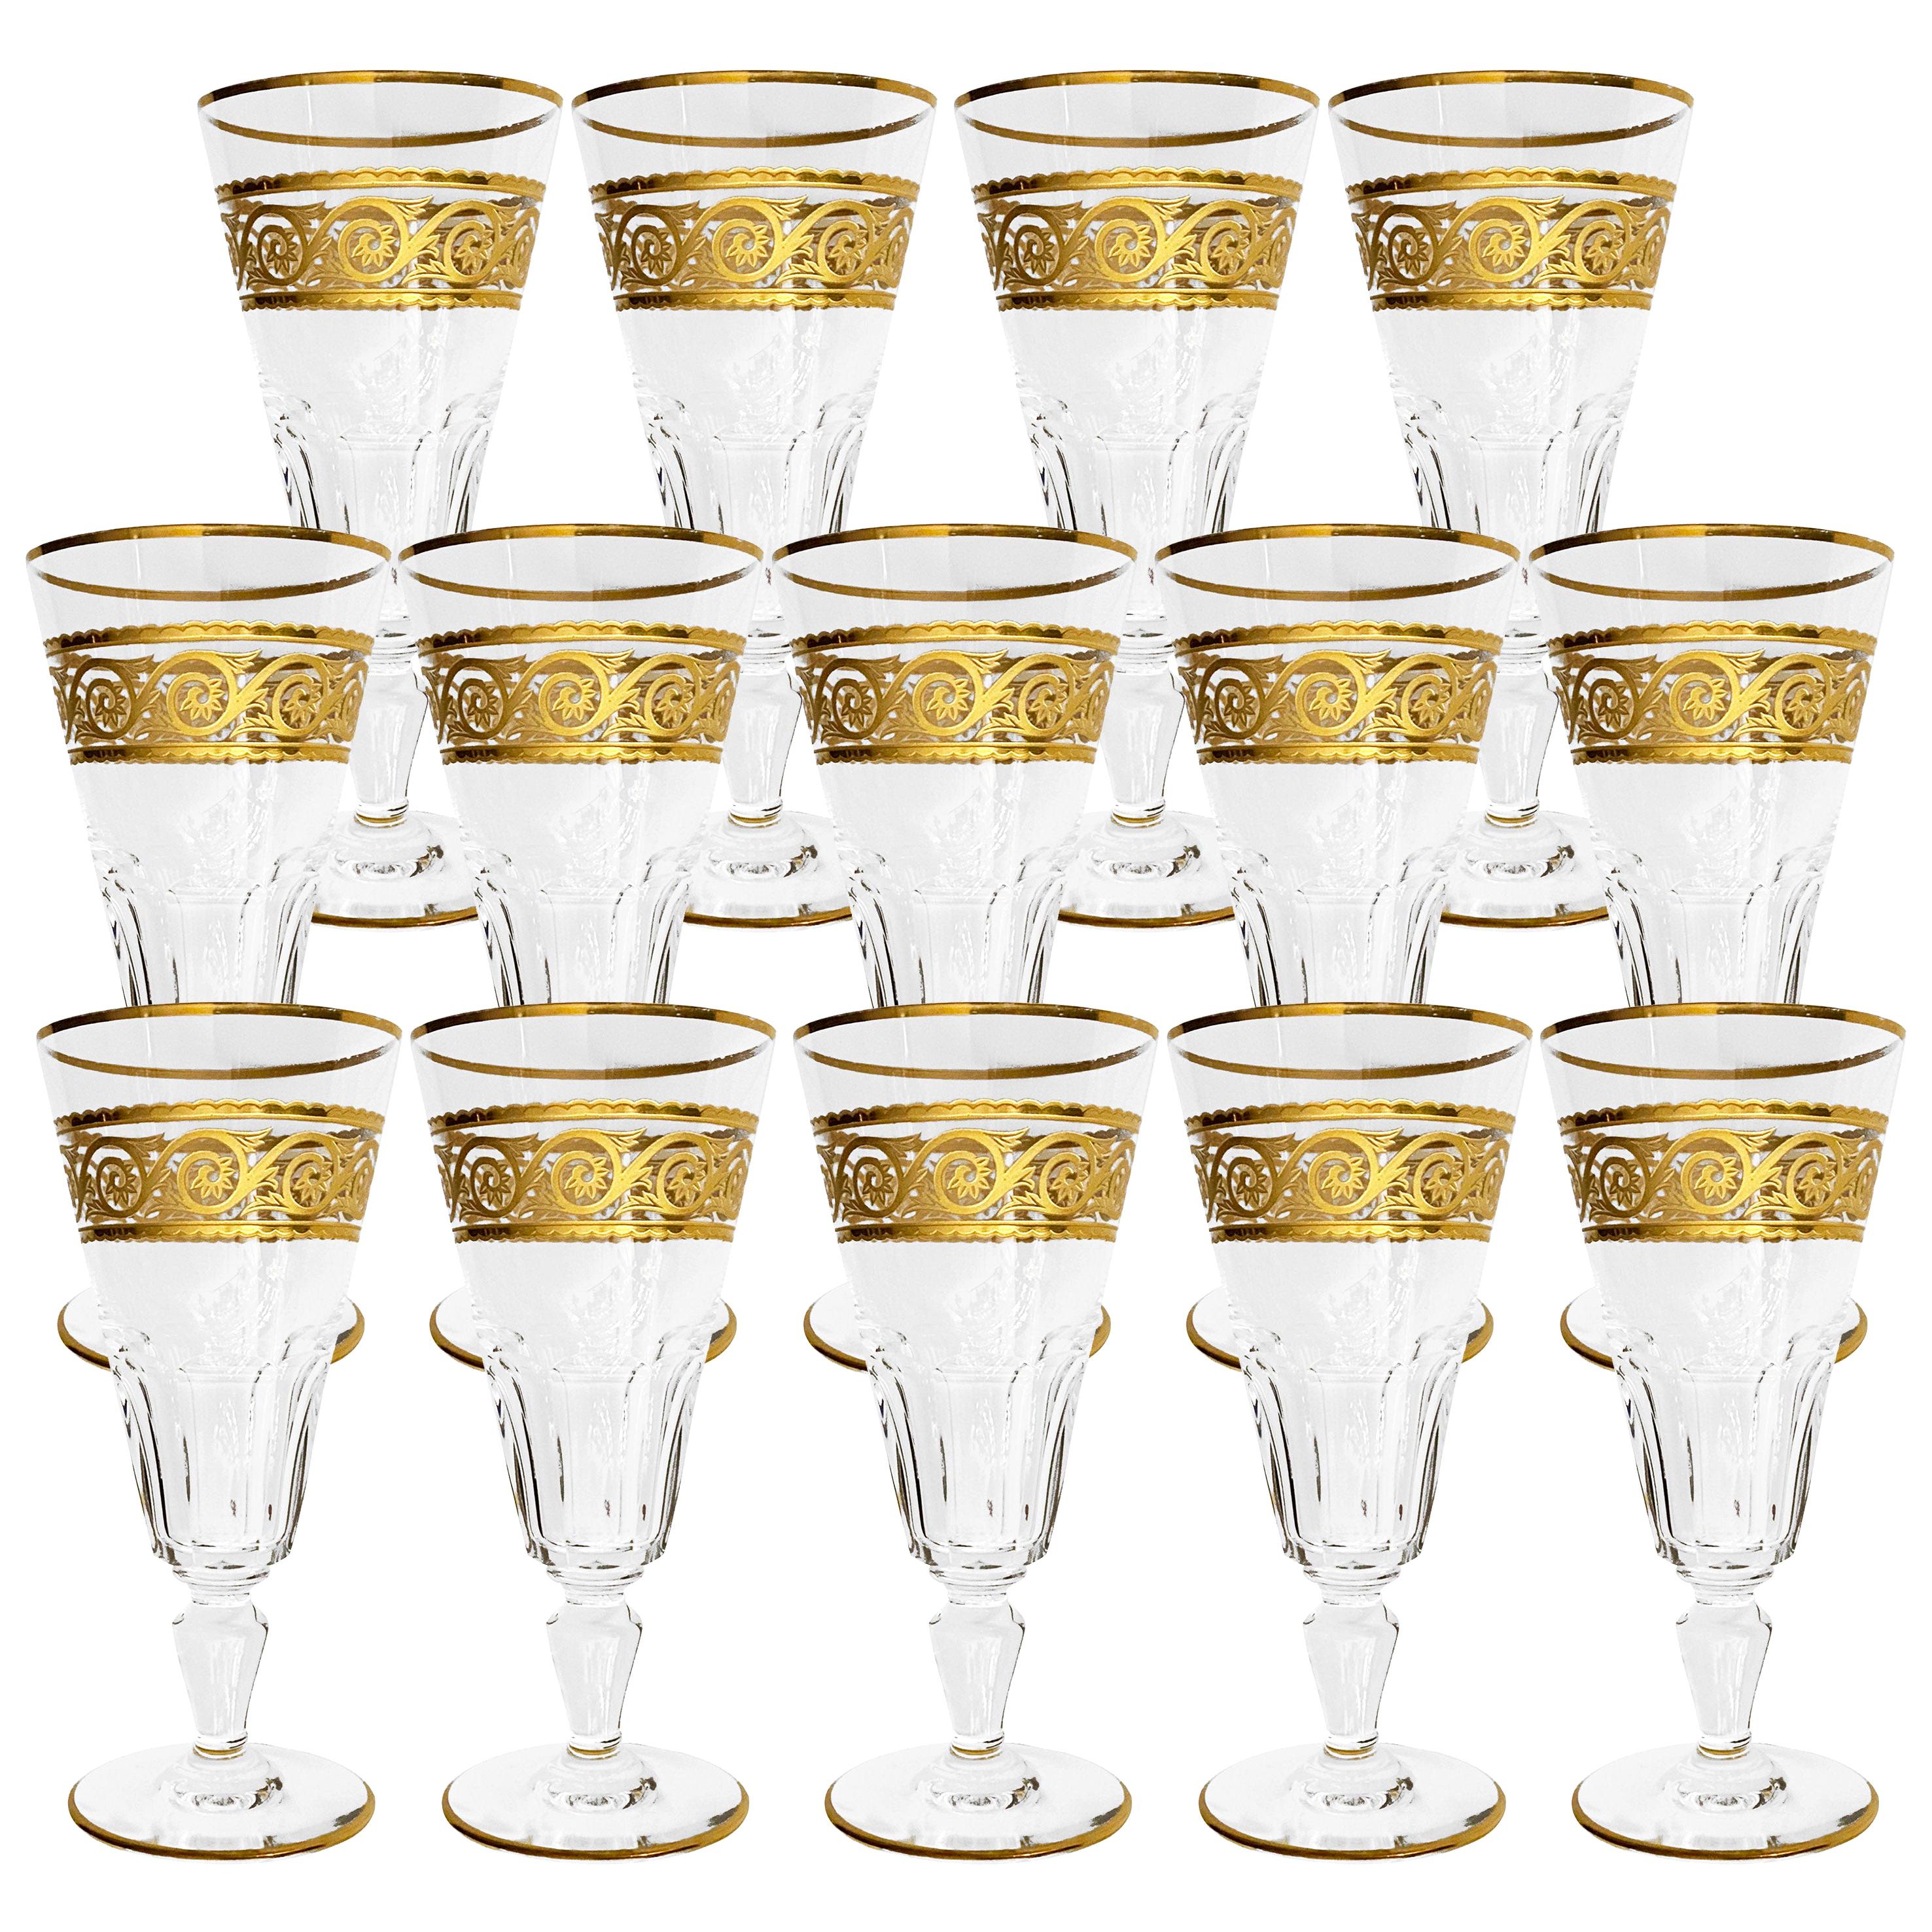 14 Champagnes Flutes Baccarat Crystal Eldorado, 22-Carat Gold Engraved, End 19th